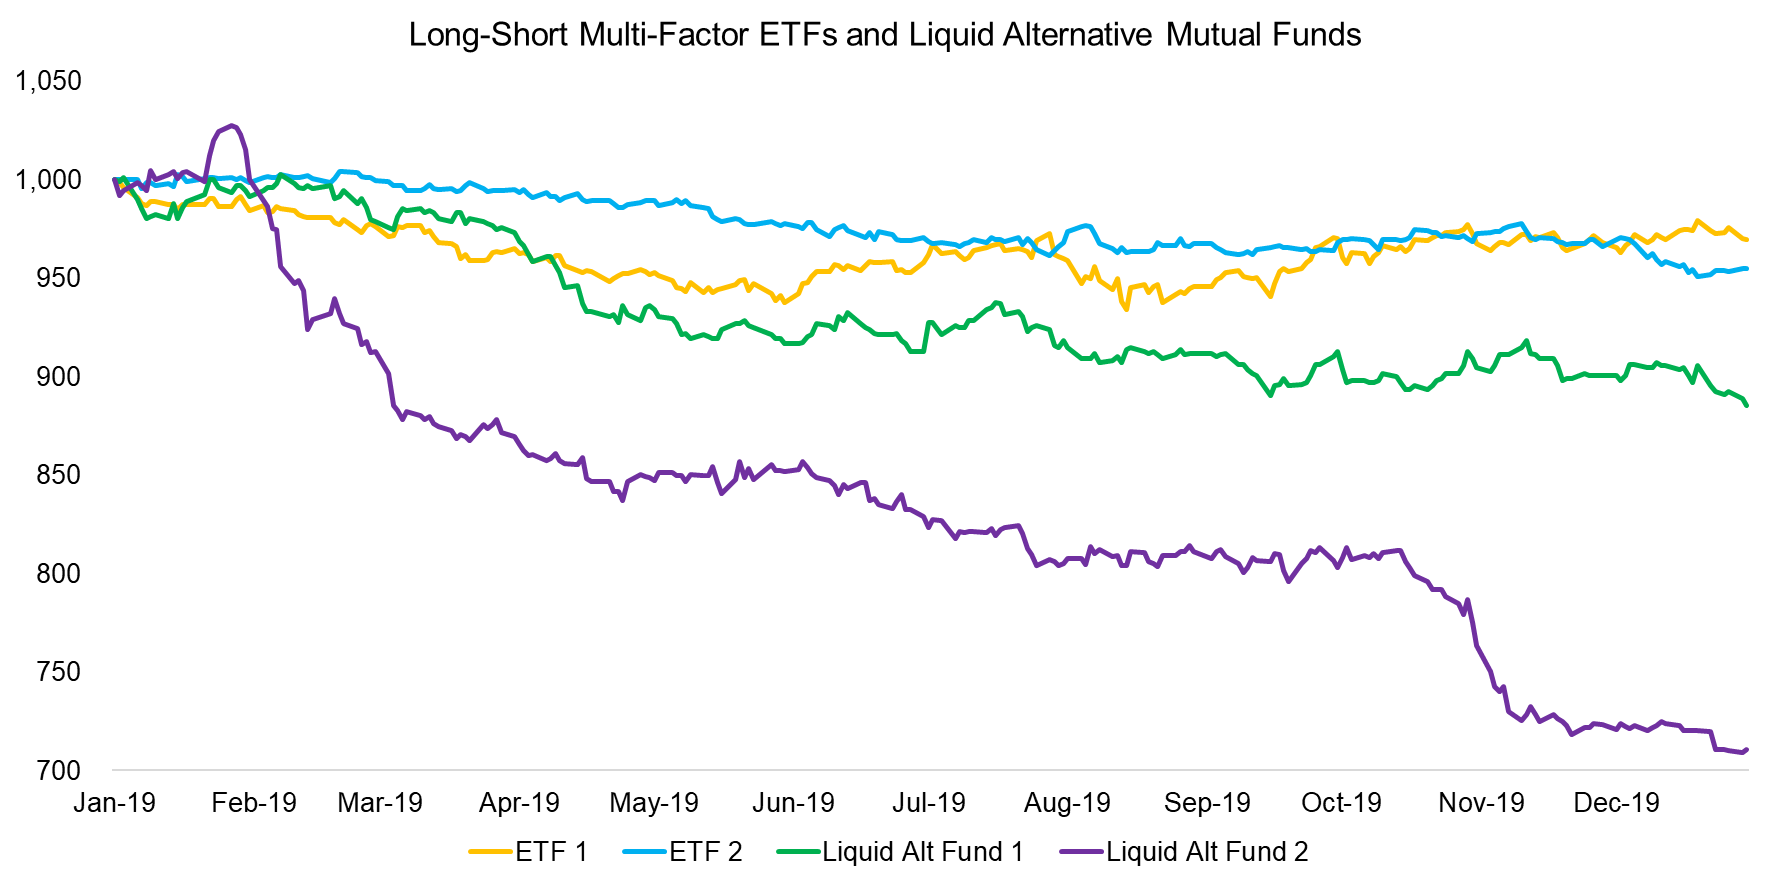 Long-Short Multi-Factor ETFs and Liquid Alternative Mutual Funds